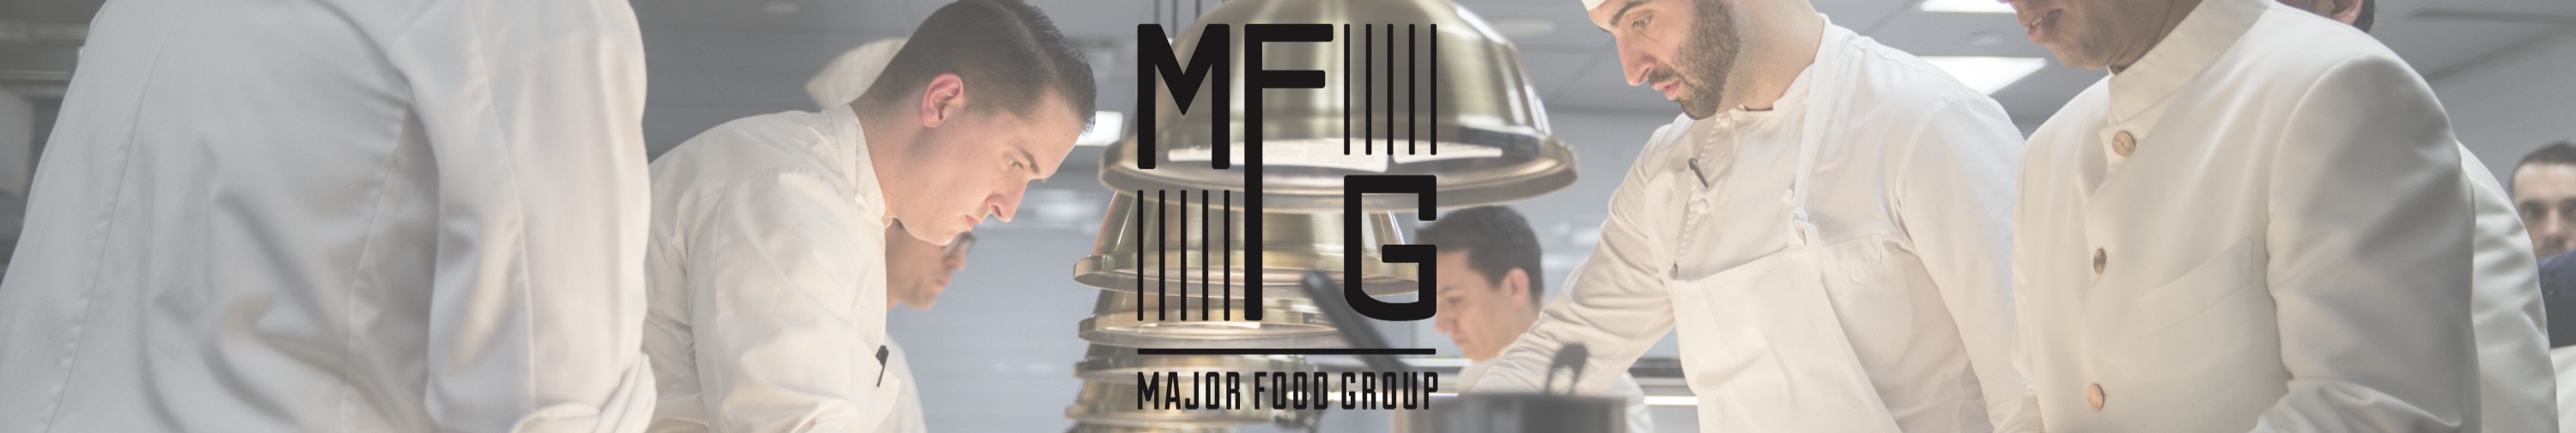 Major Food Group background